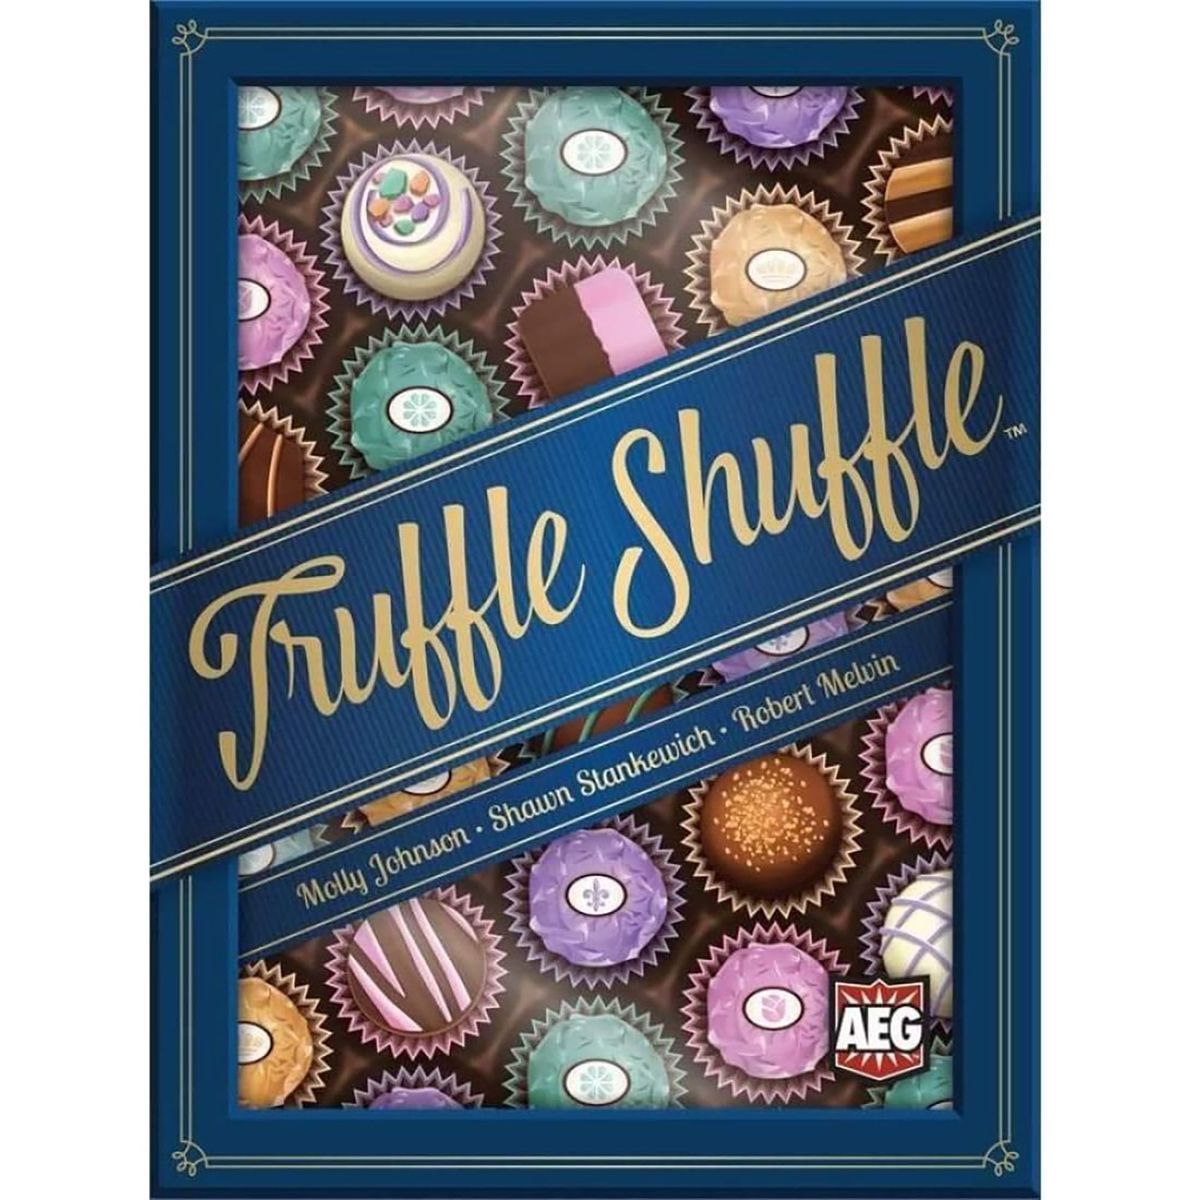 [RDY] [送料無料] Truffle Shuffle - Chocolate Shop Board Game, ALDERAC Entertainment Group (AEG), 対象年齢8歳以上, 2-4人, 15-30分 [楽天海外通販] | Truffle Shuffle - Chocolate Shop Board Game, Alderac Entertainment Group (AEG), Ages 8+,